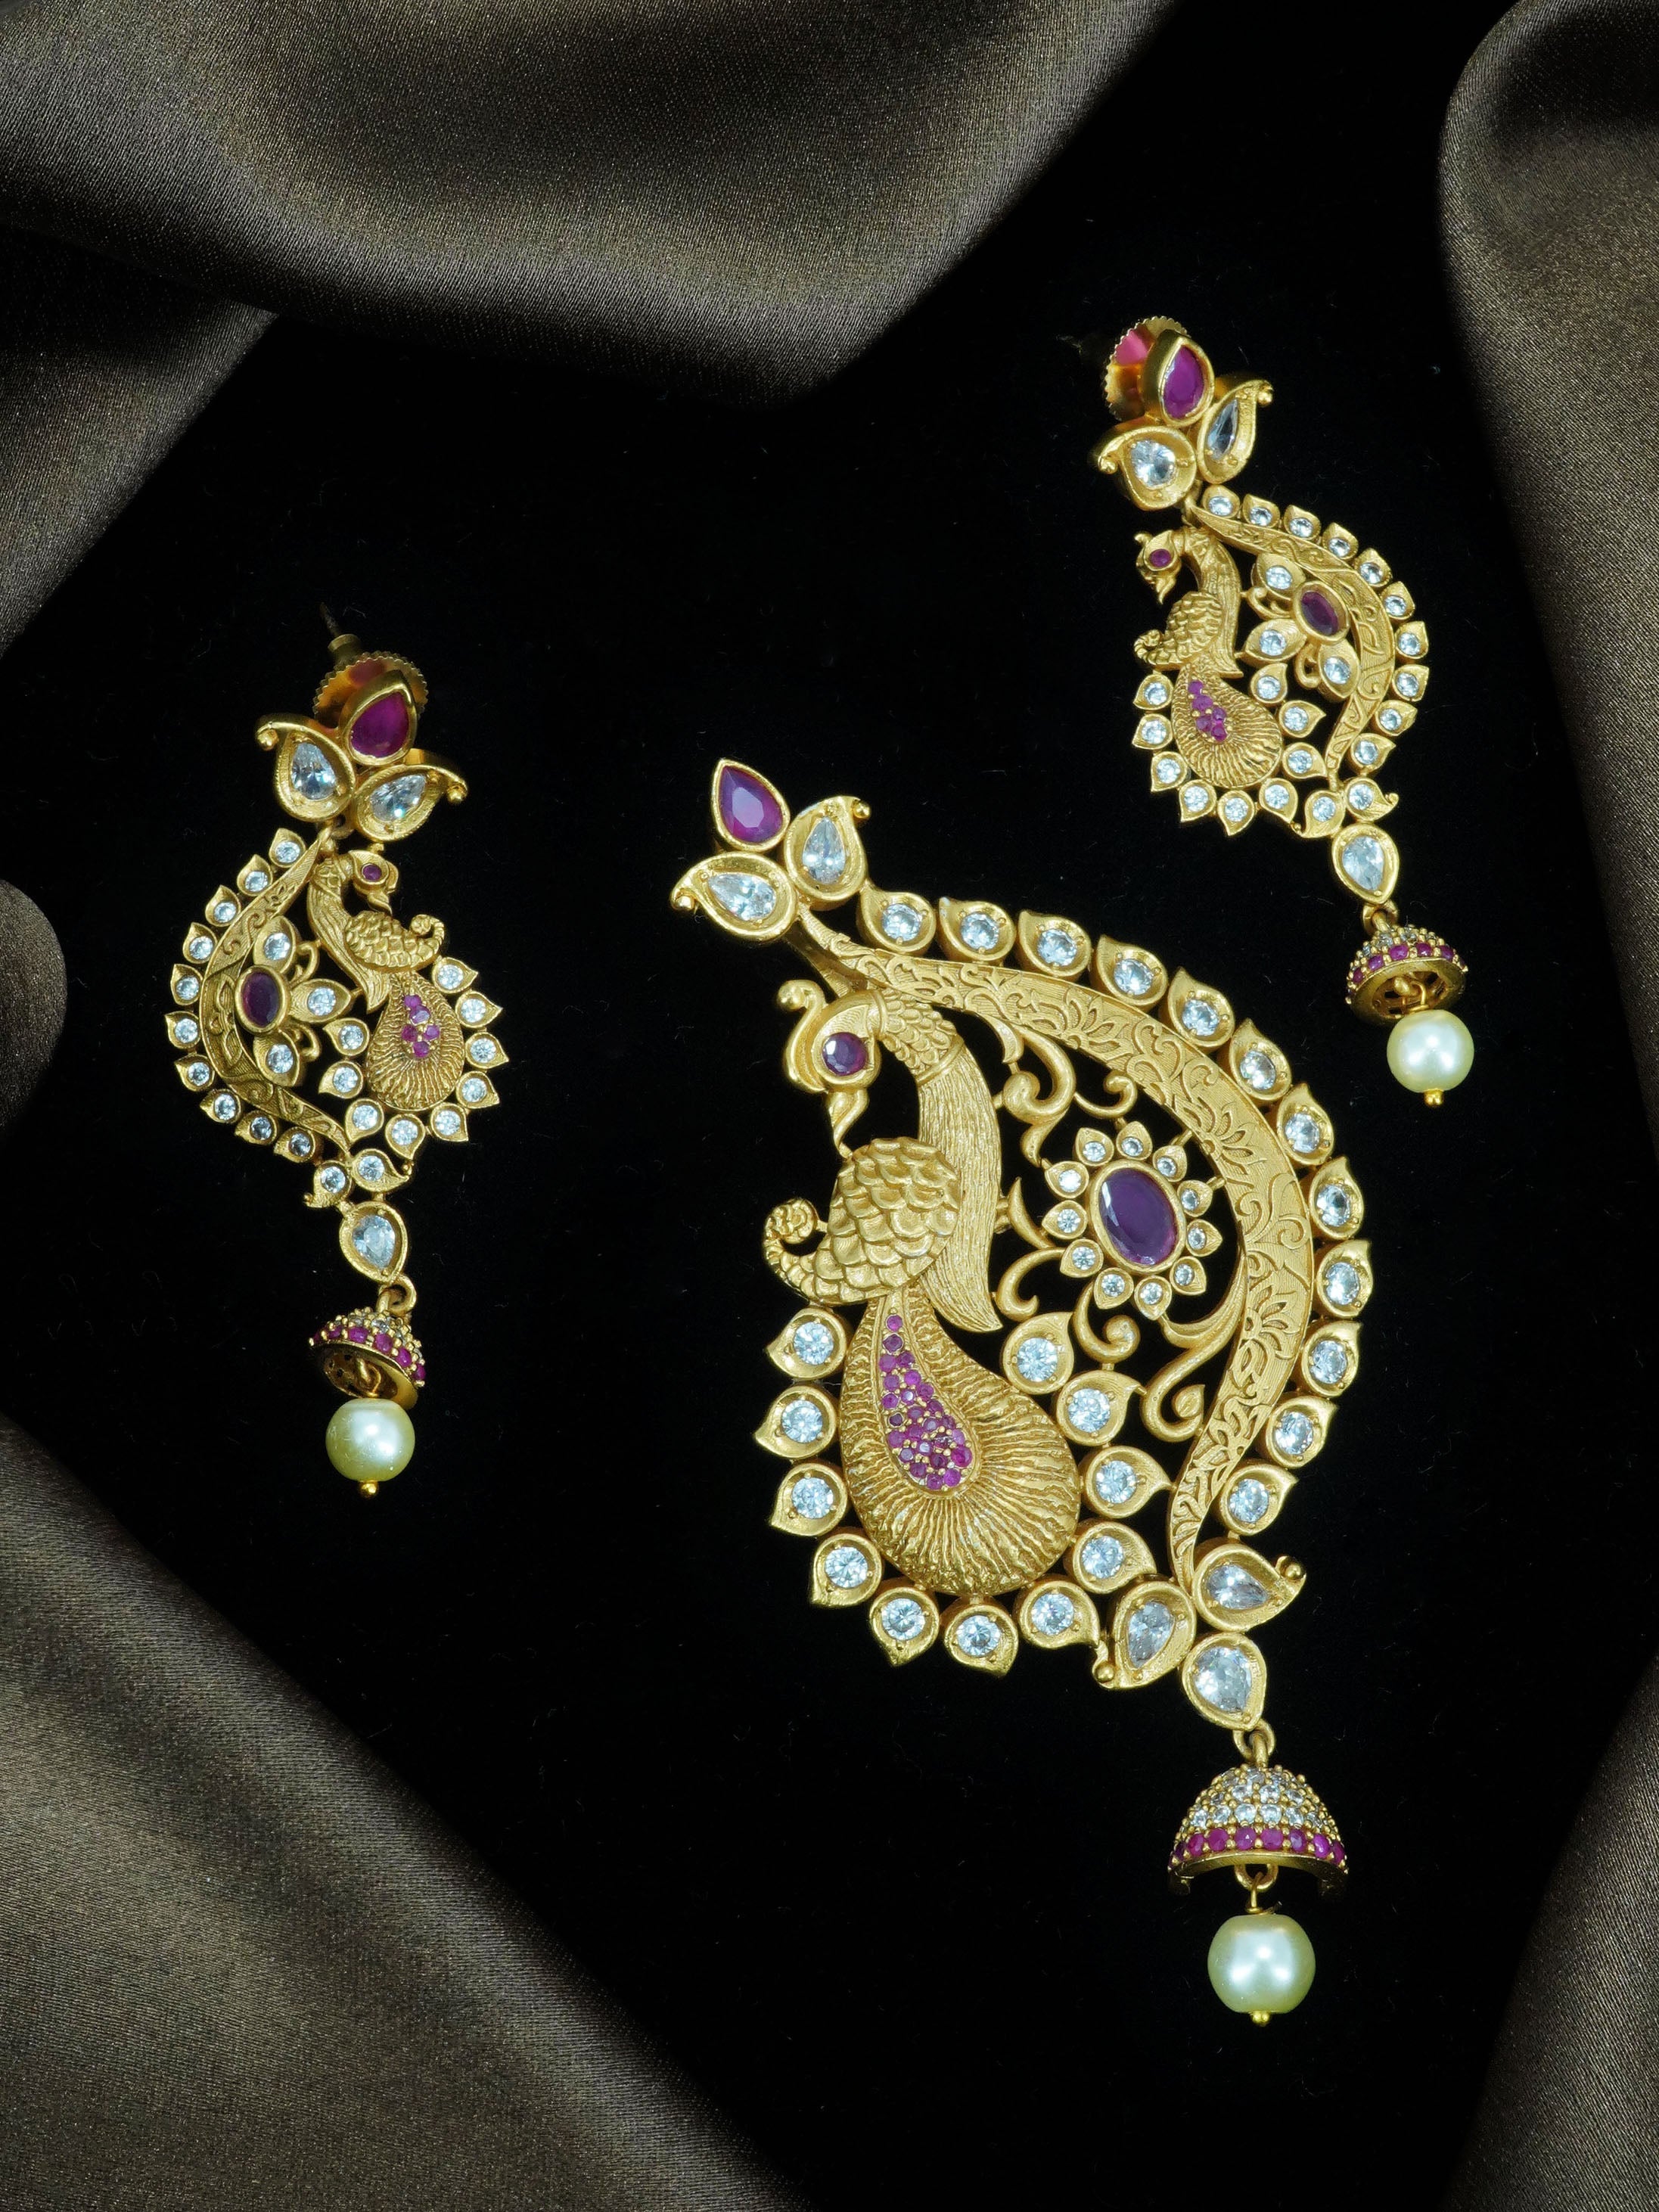 Antique Gold Finish Leaf shape Pendant Set with pearl drop PPN11-690-3446N